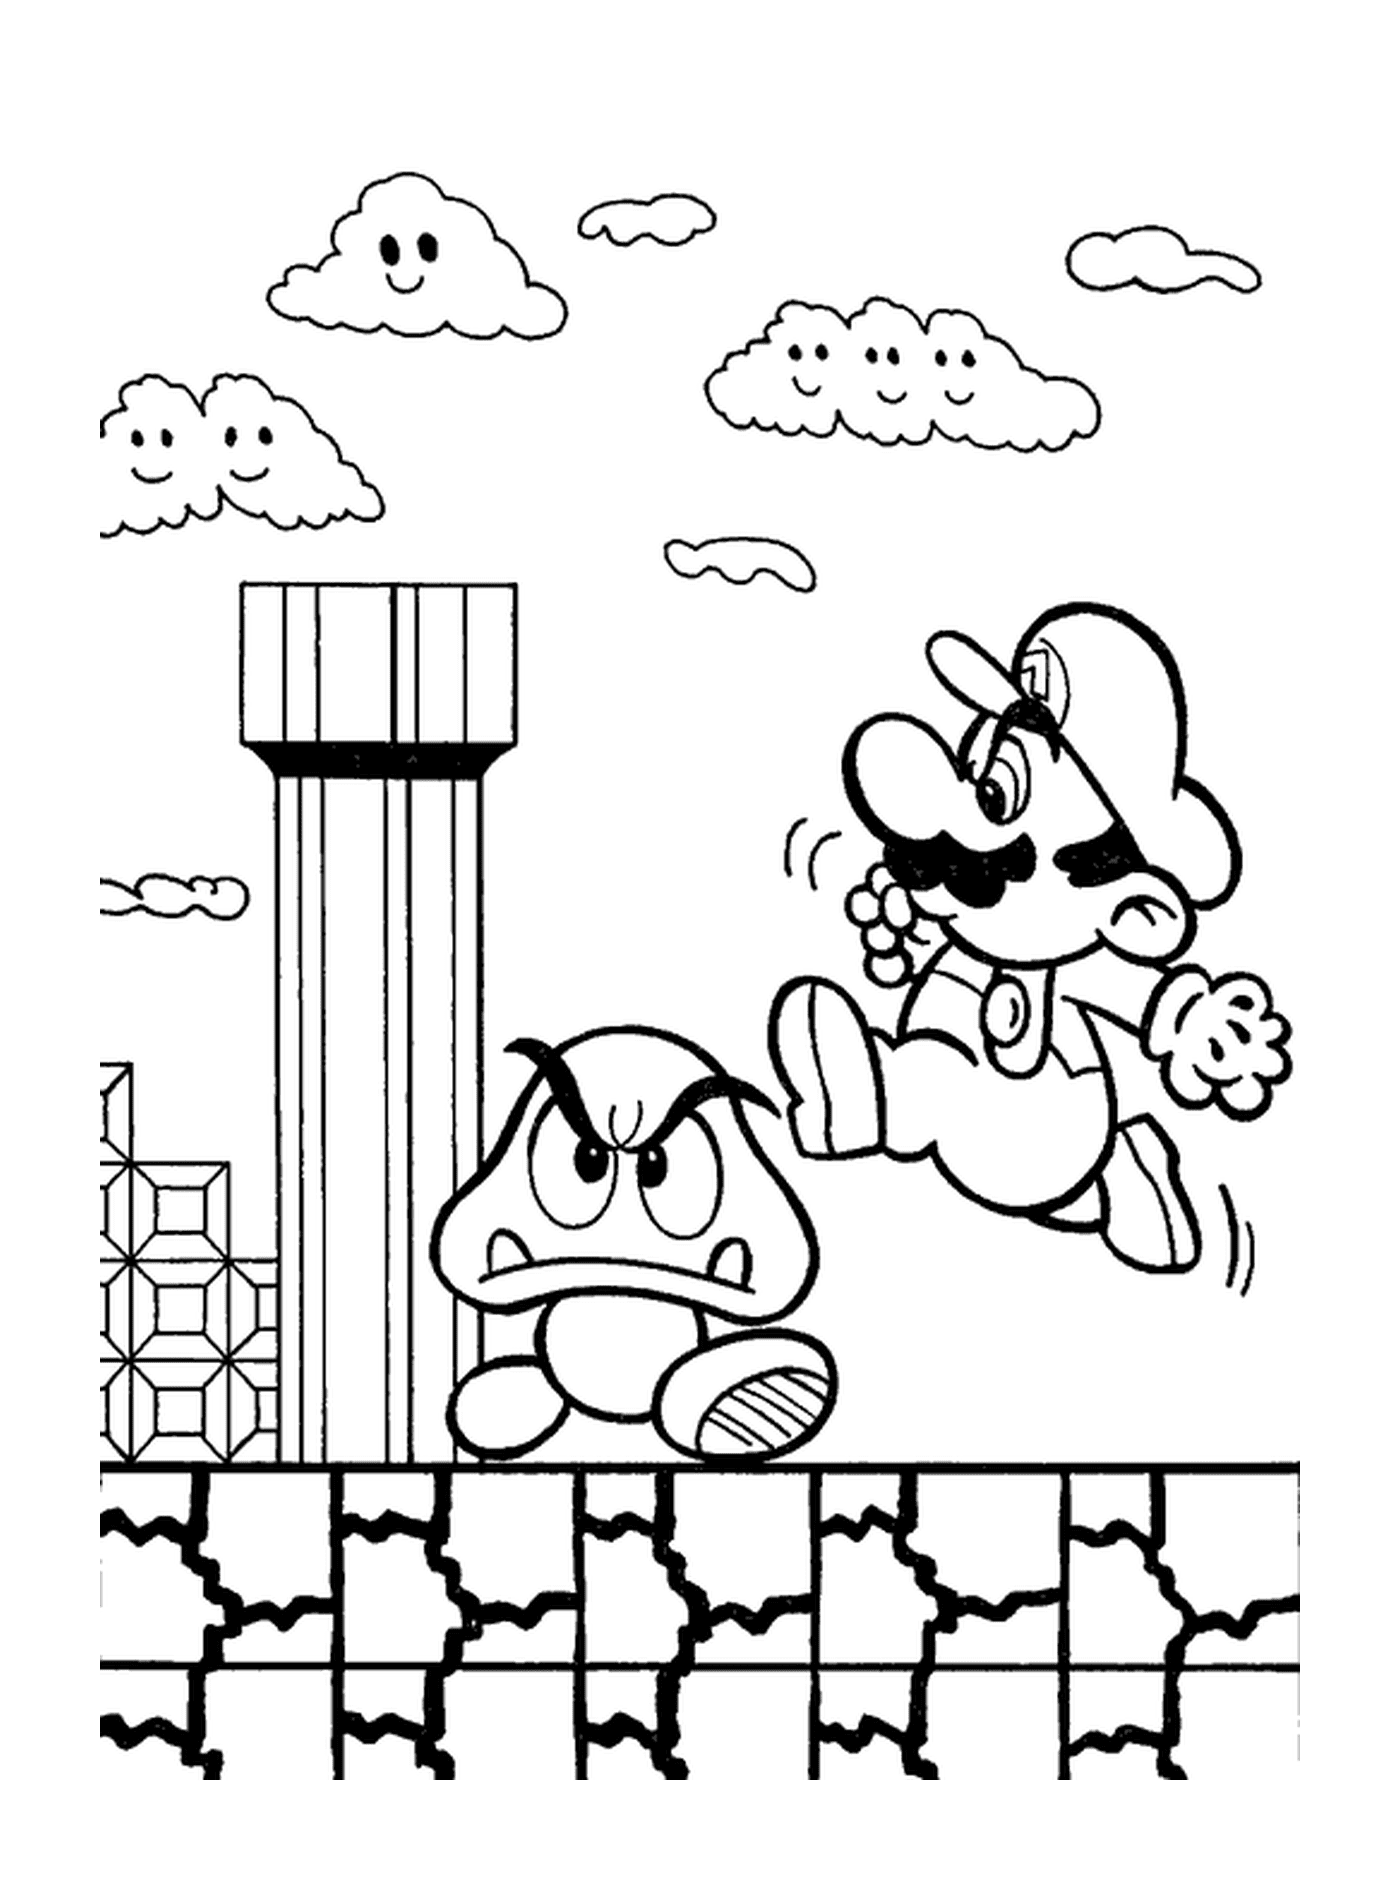 Mario saute sur un champignon